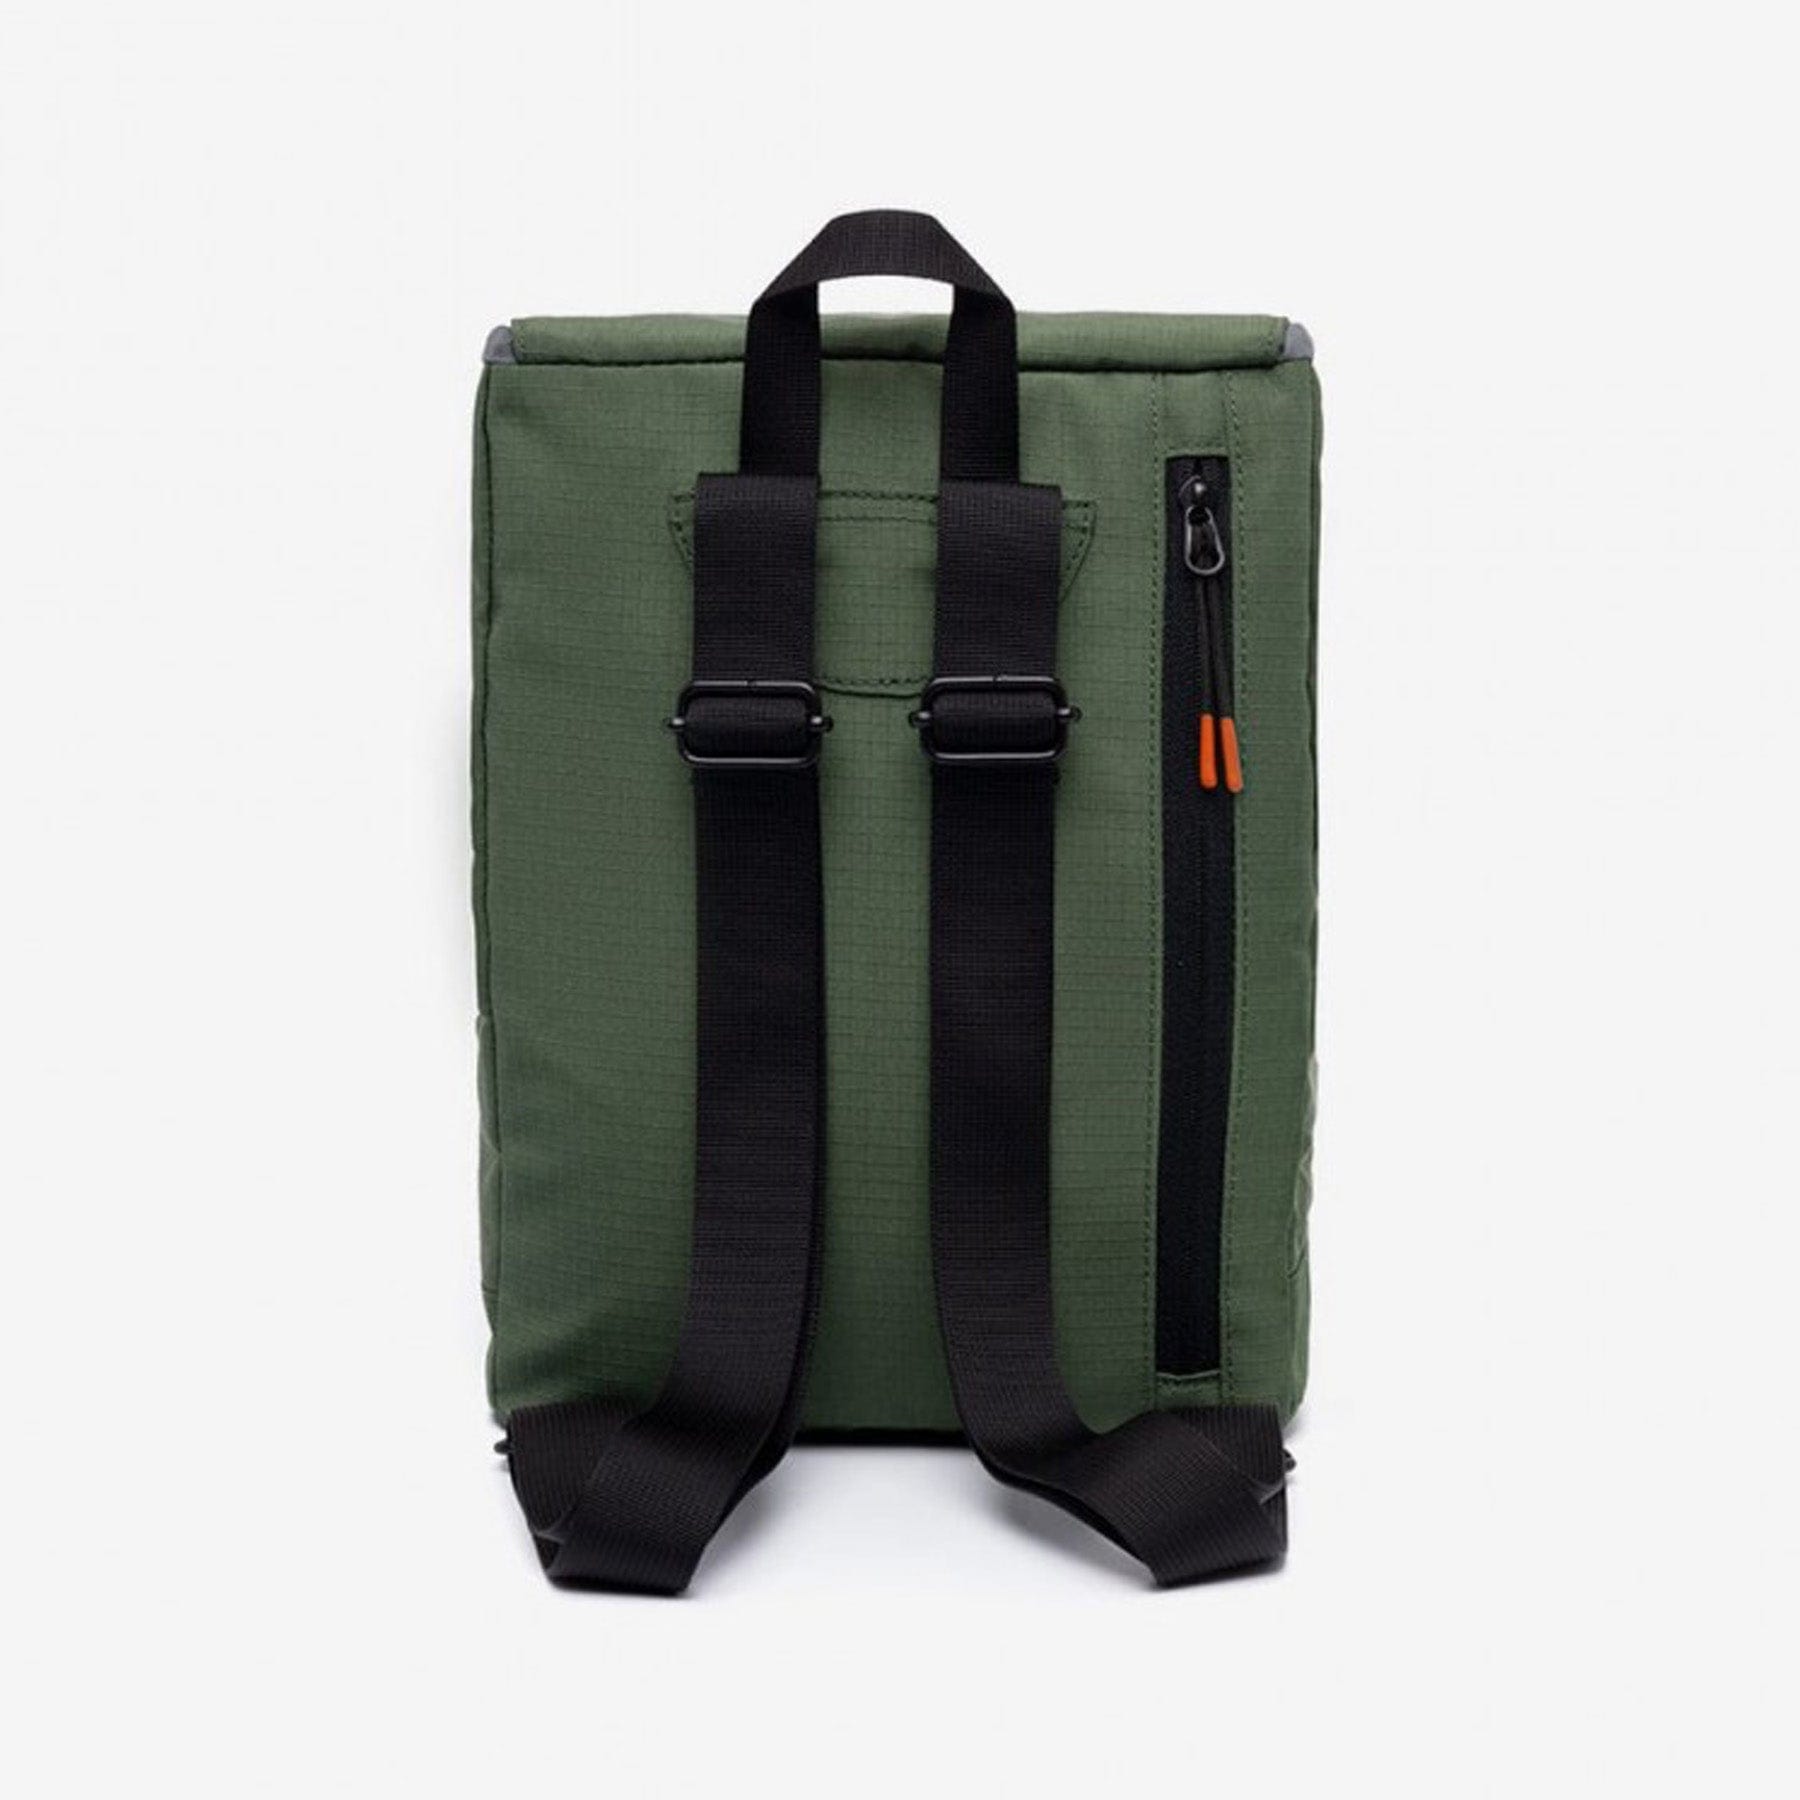 Scout mini backpack vandra pine ripstop